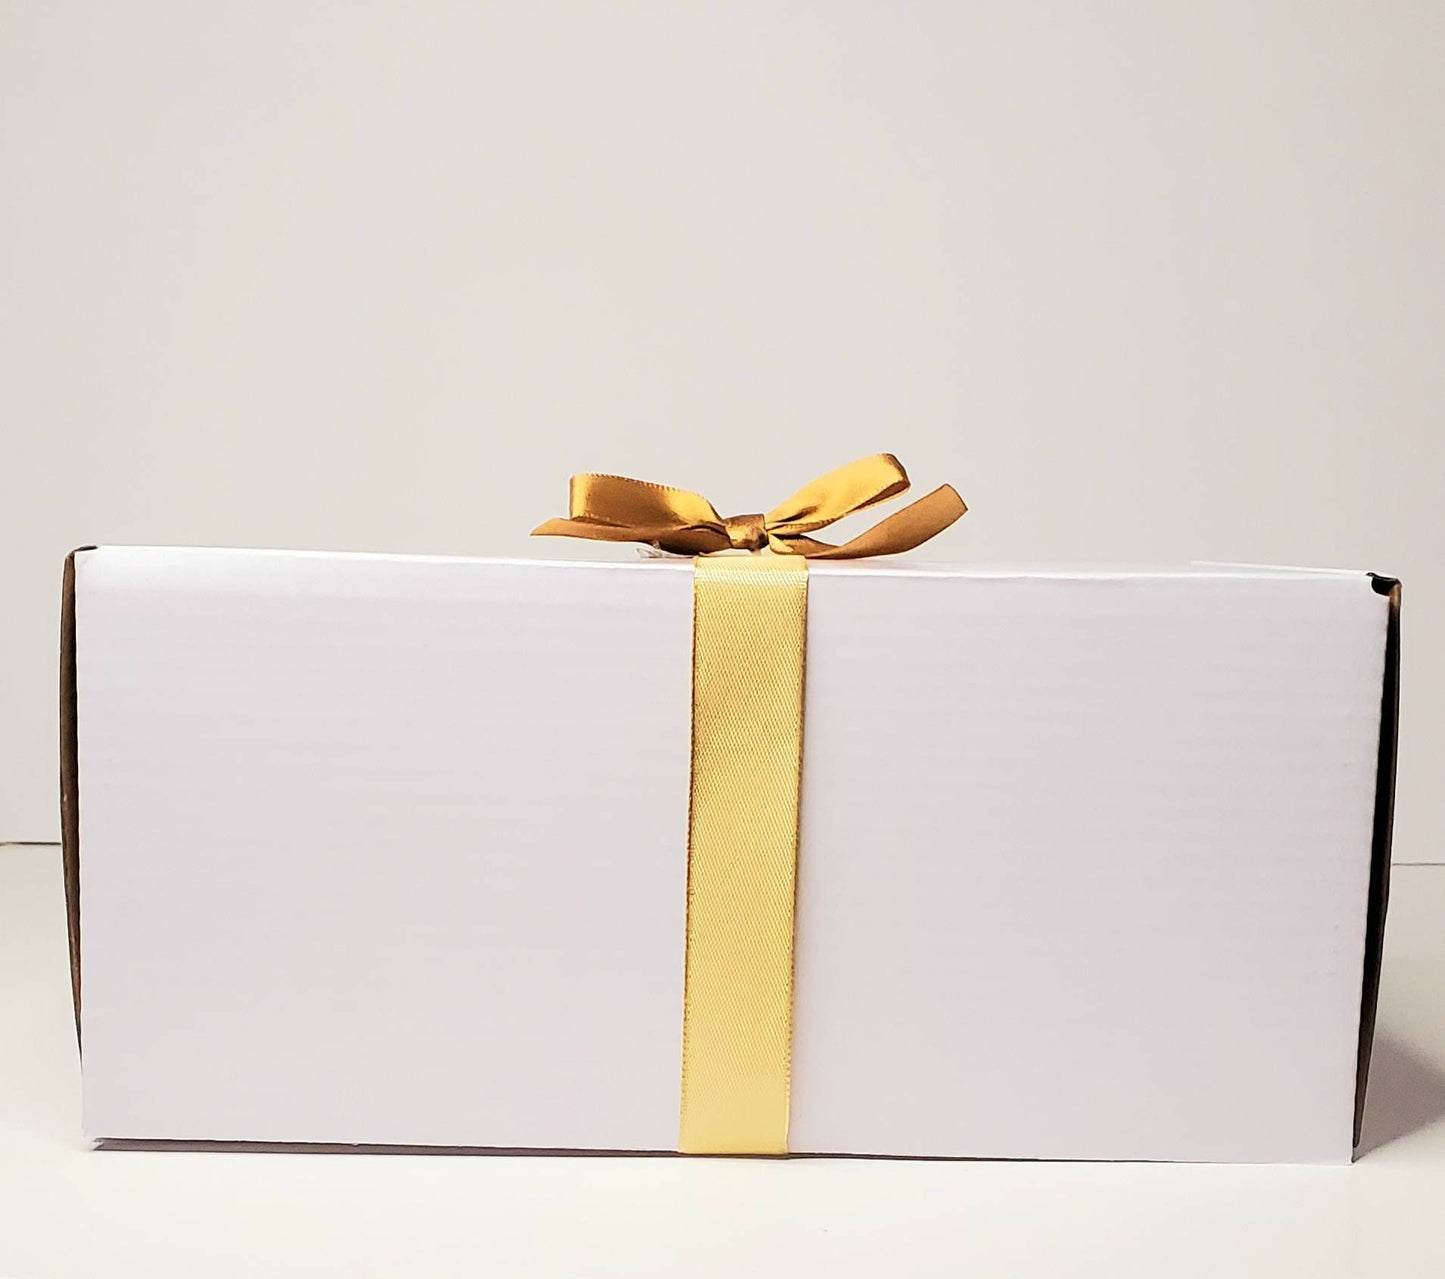 Lux Perfume Self Care Gift Sets|Handmade|Organic|Holiday